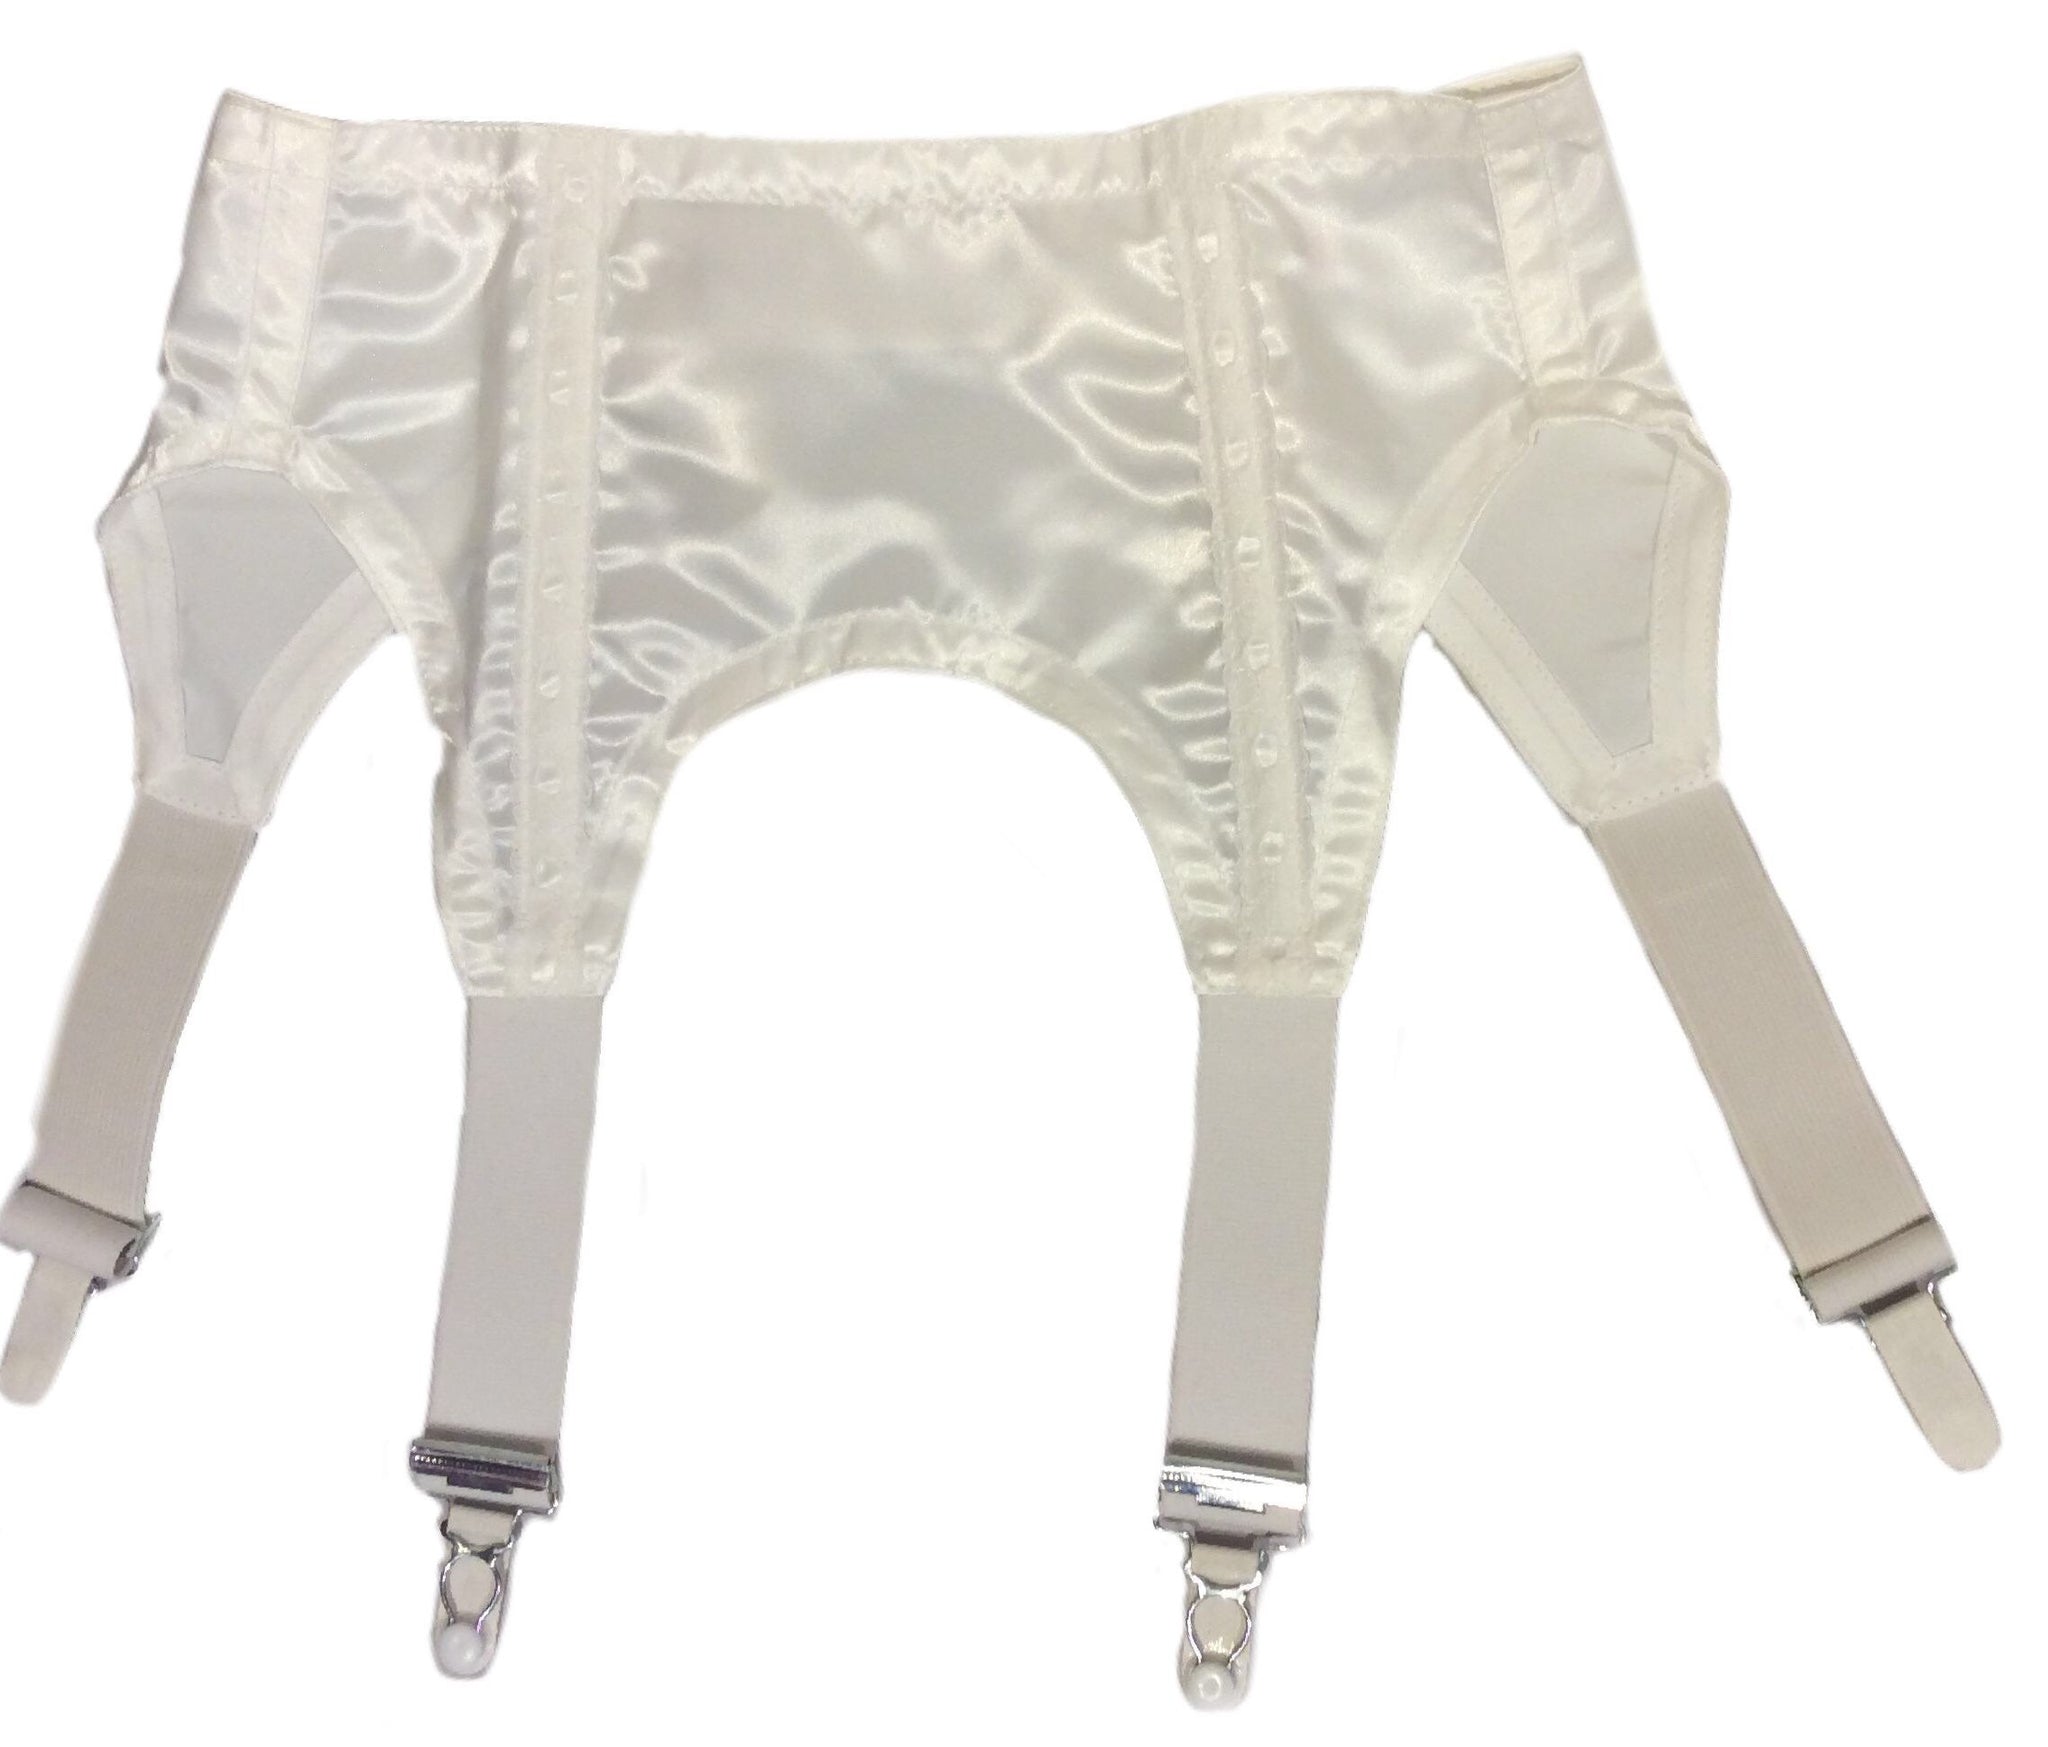 Four Strap Retro Suspender Belt - White